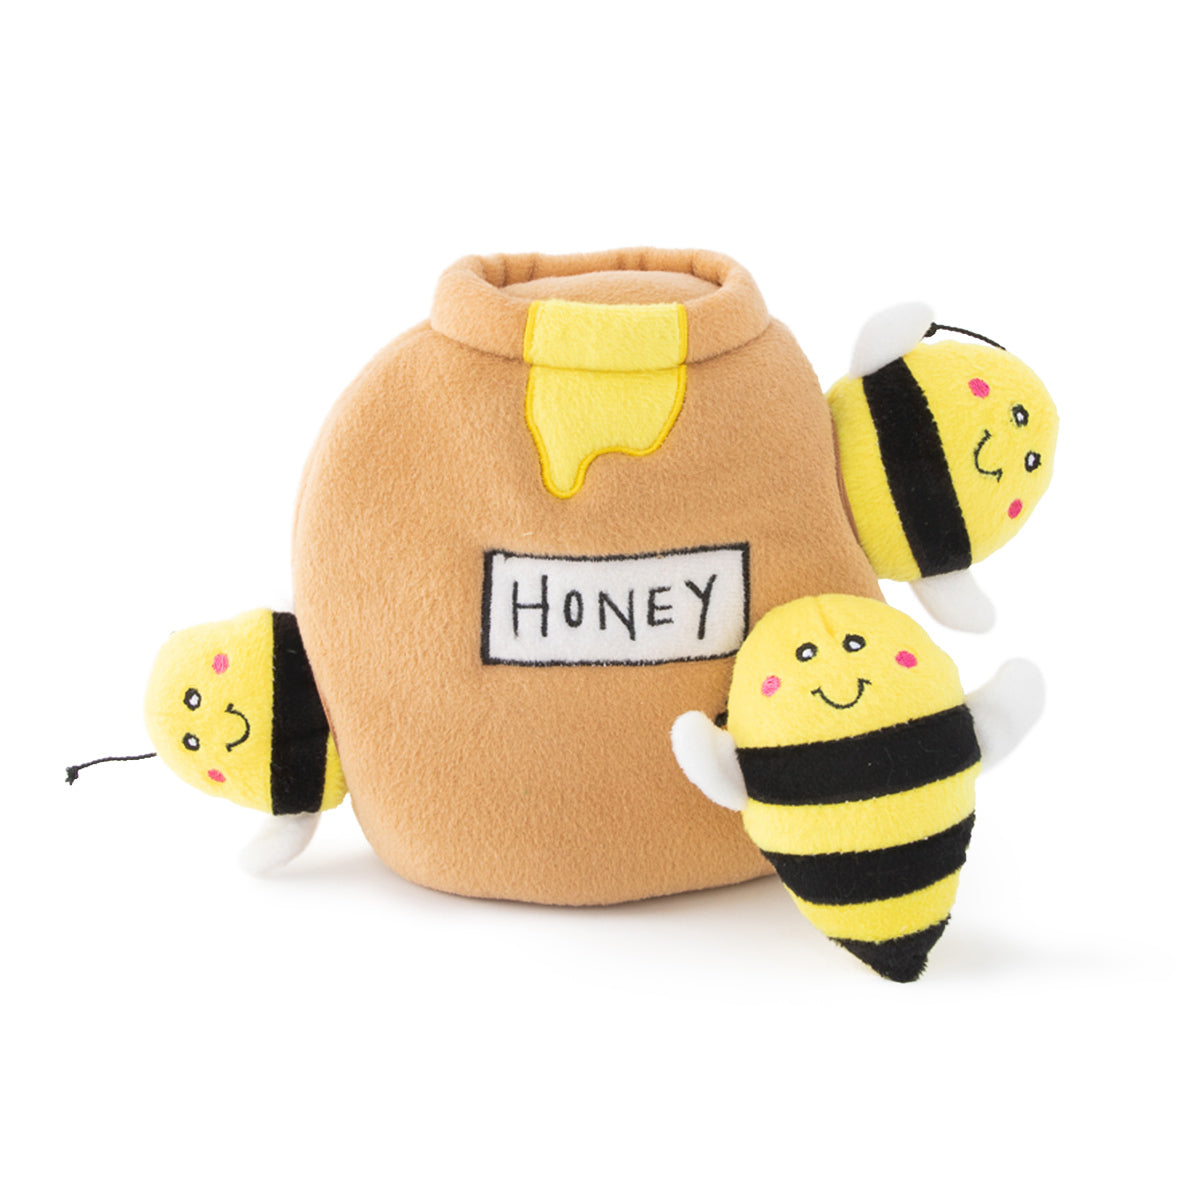 'Honey Pot Burrow' Toy